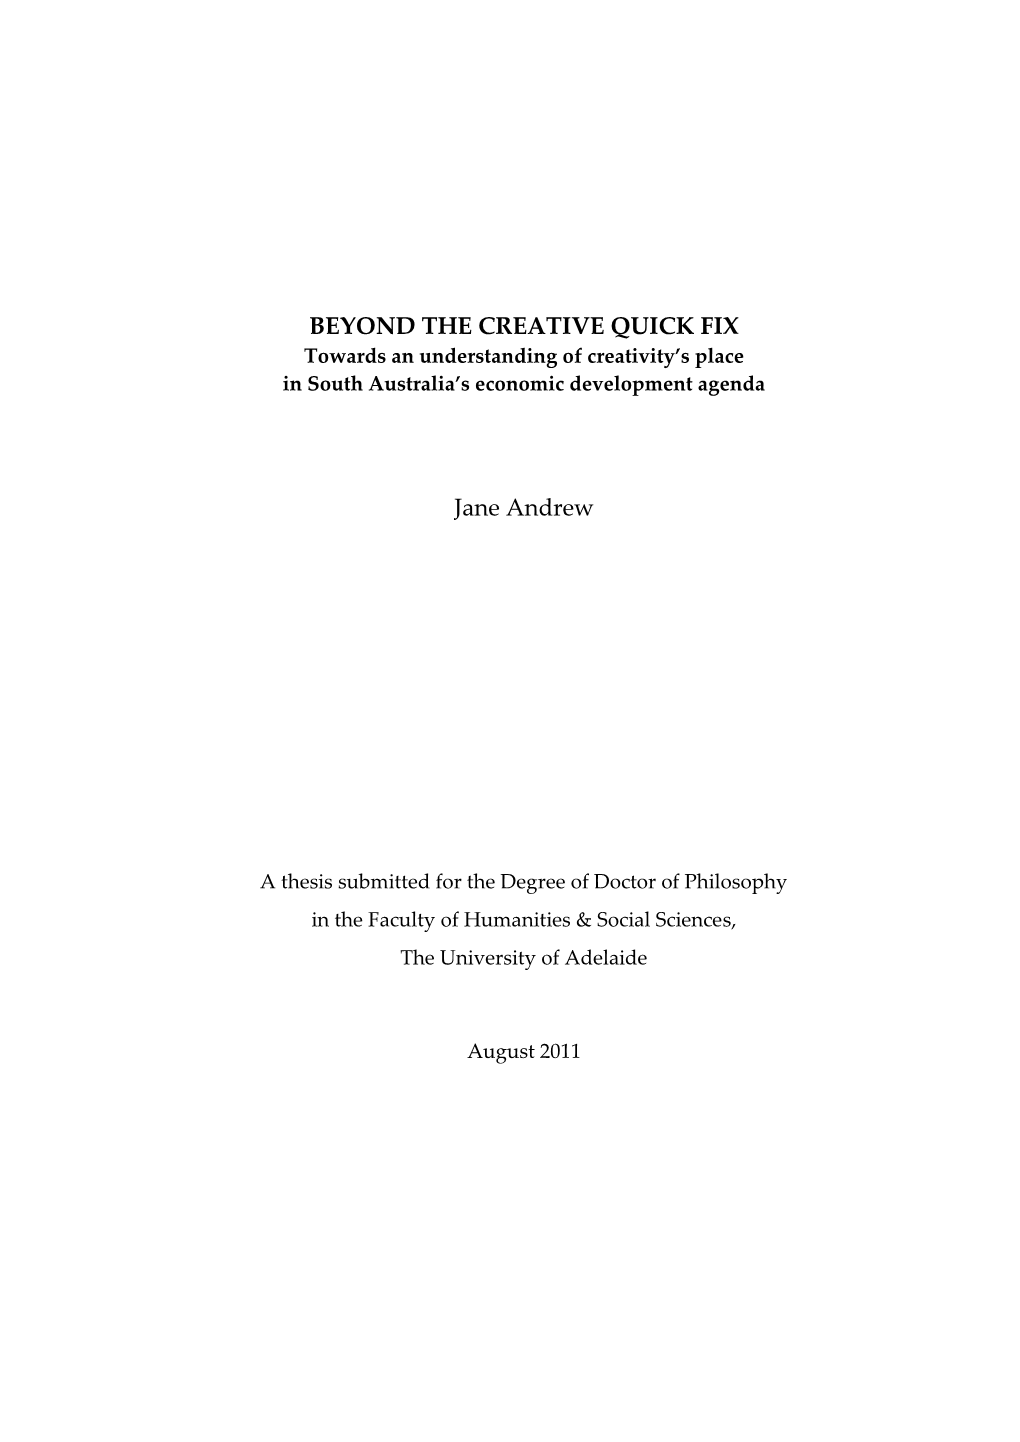 Beyond the Creative Quick Fix, Towards an Understanding of Creativity's Place in South Australia's Economic Development